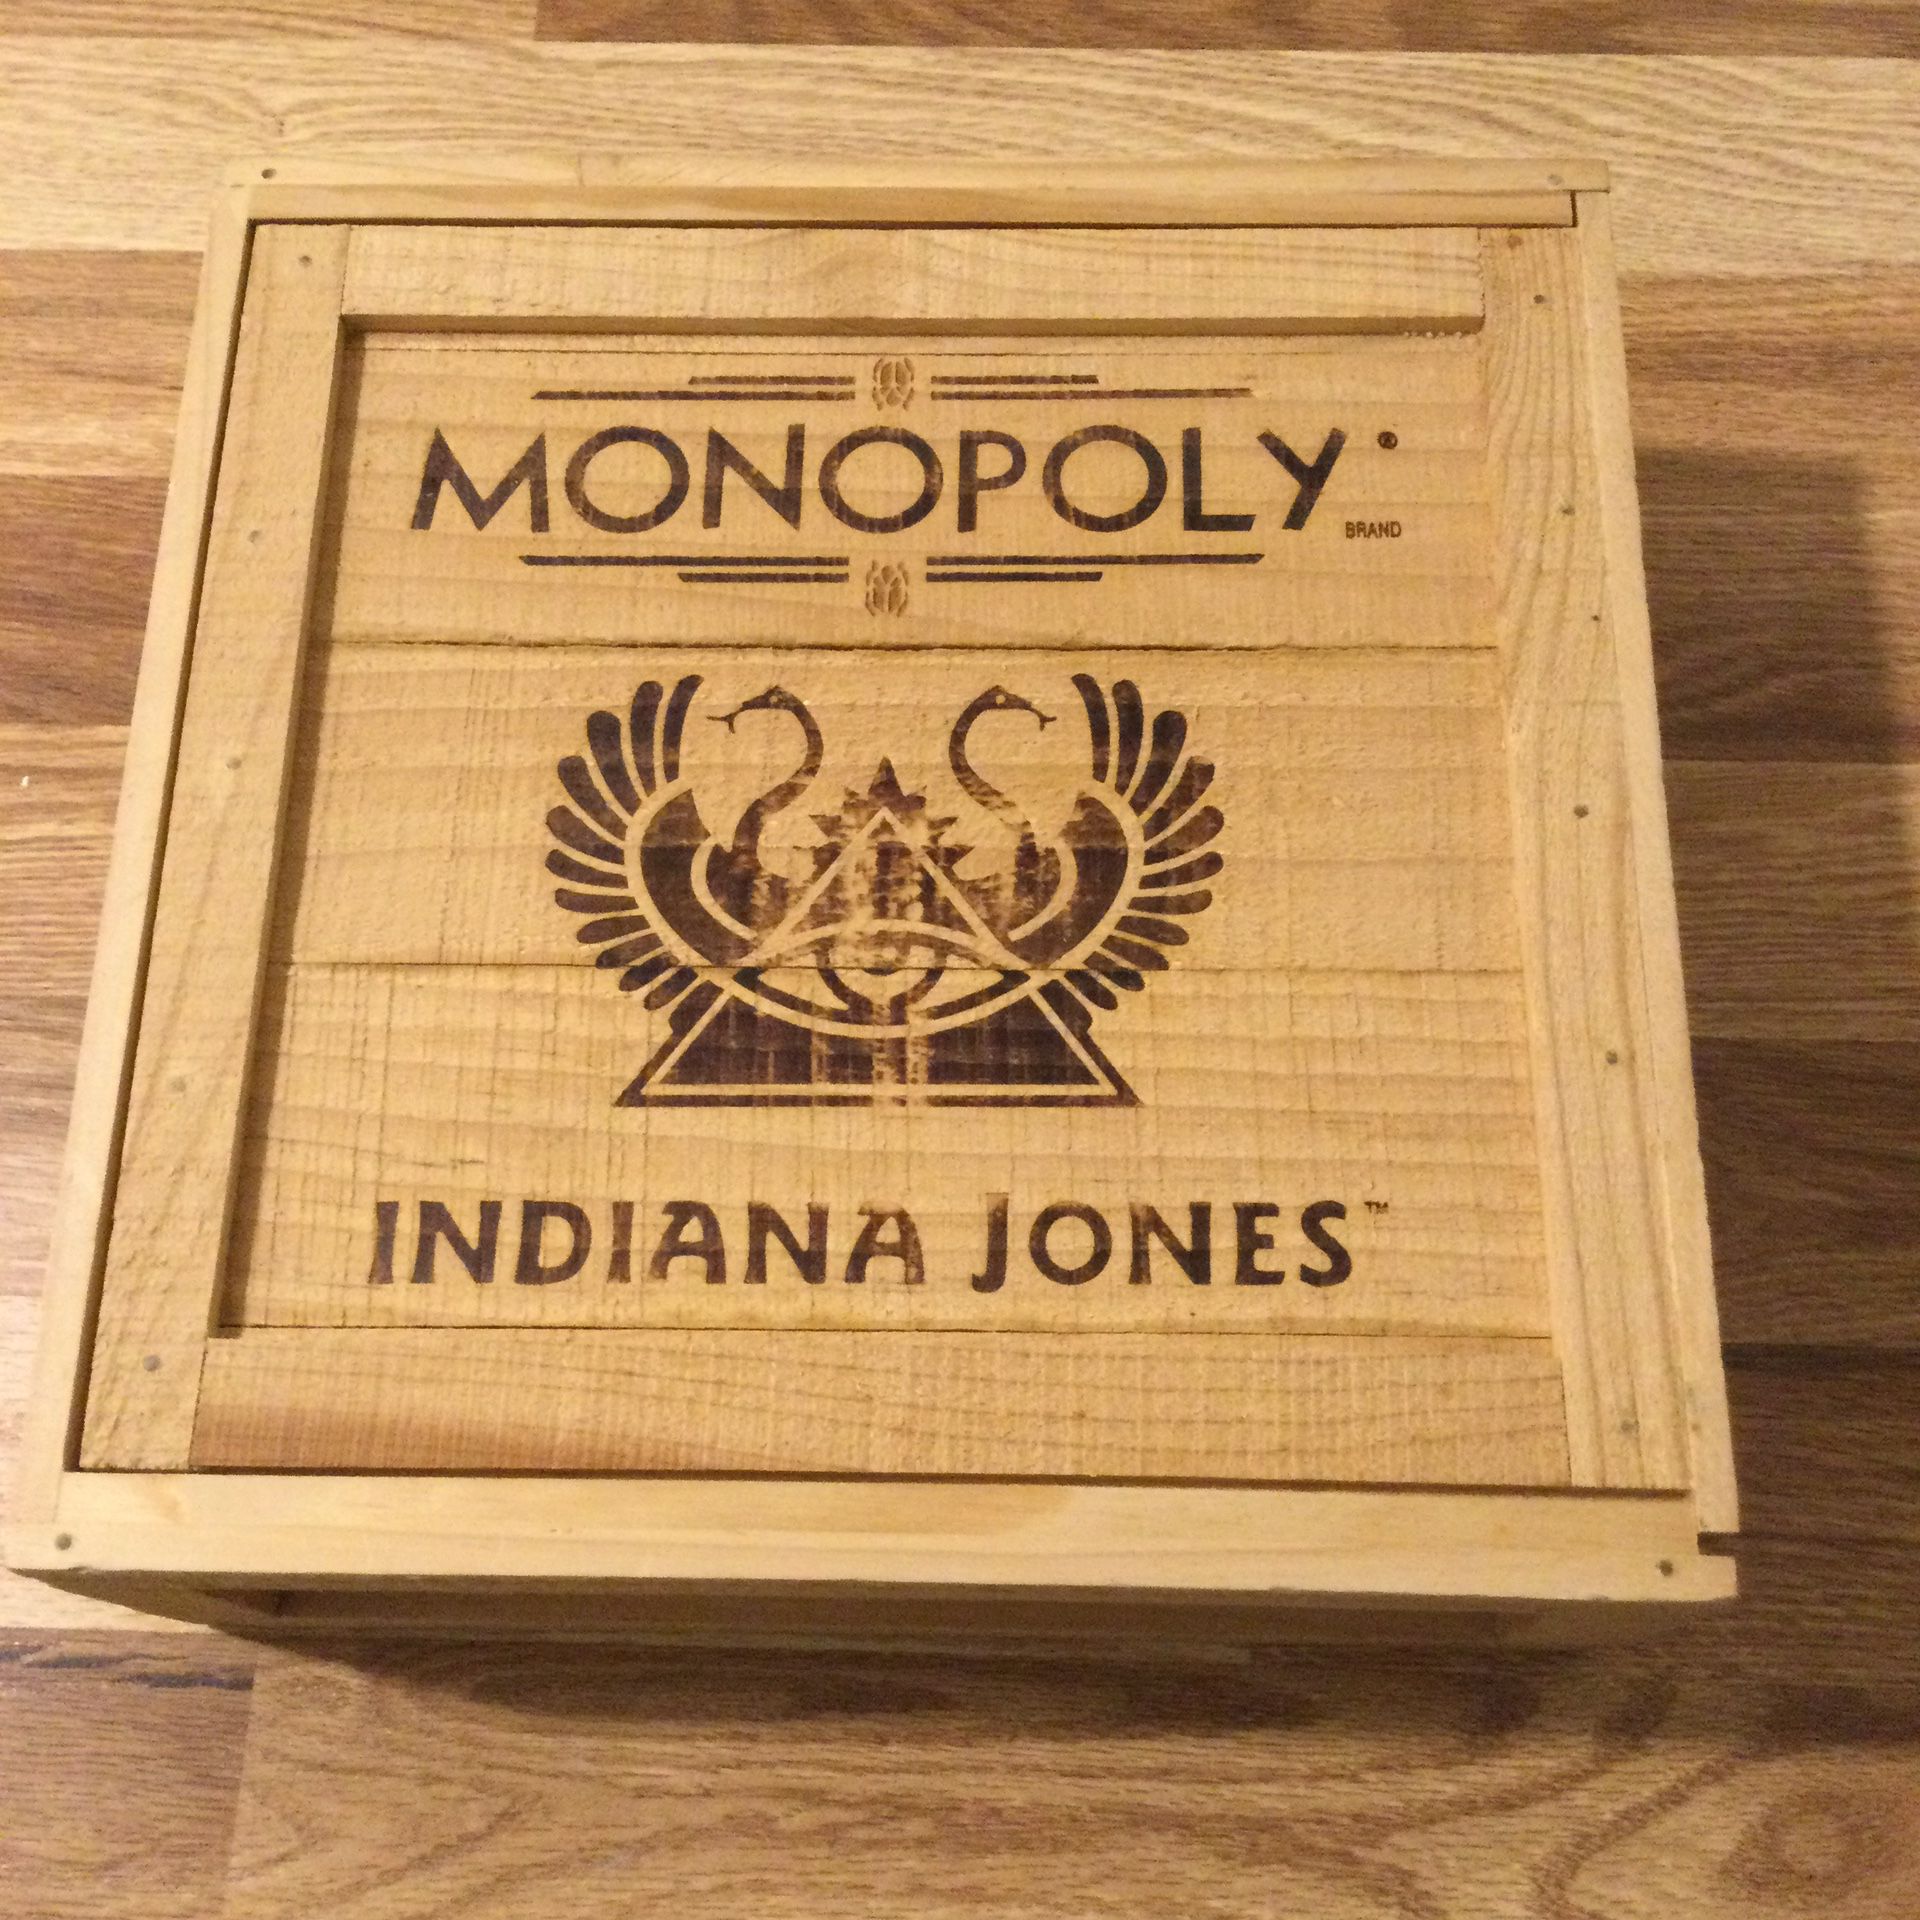 Indiana Jones Monopoly Collector’s Edition - Unused